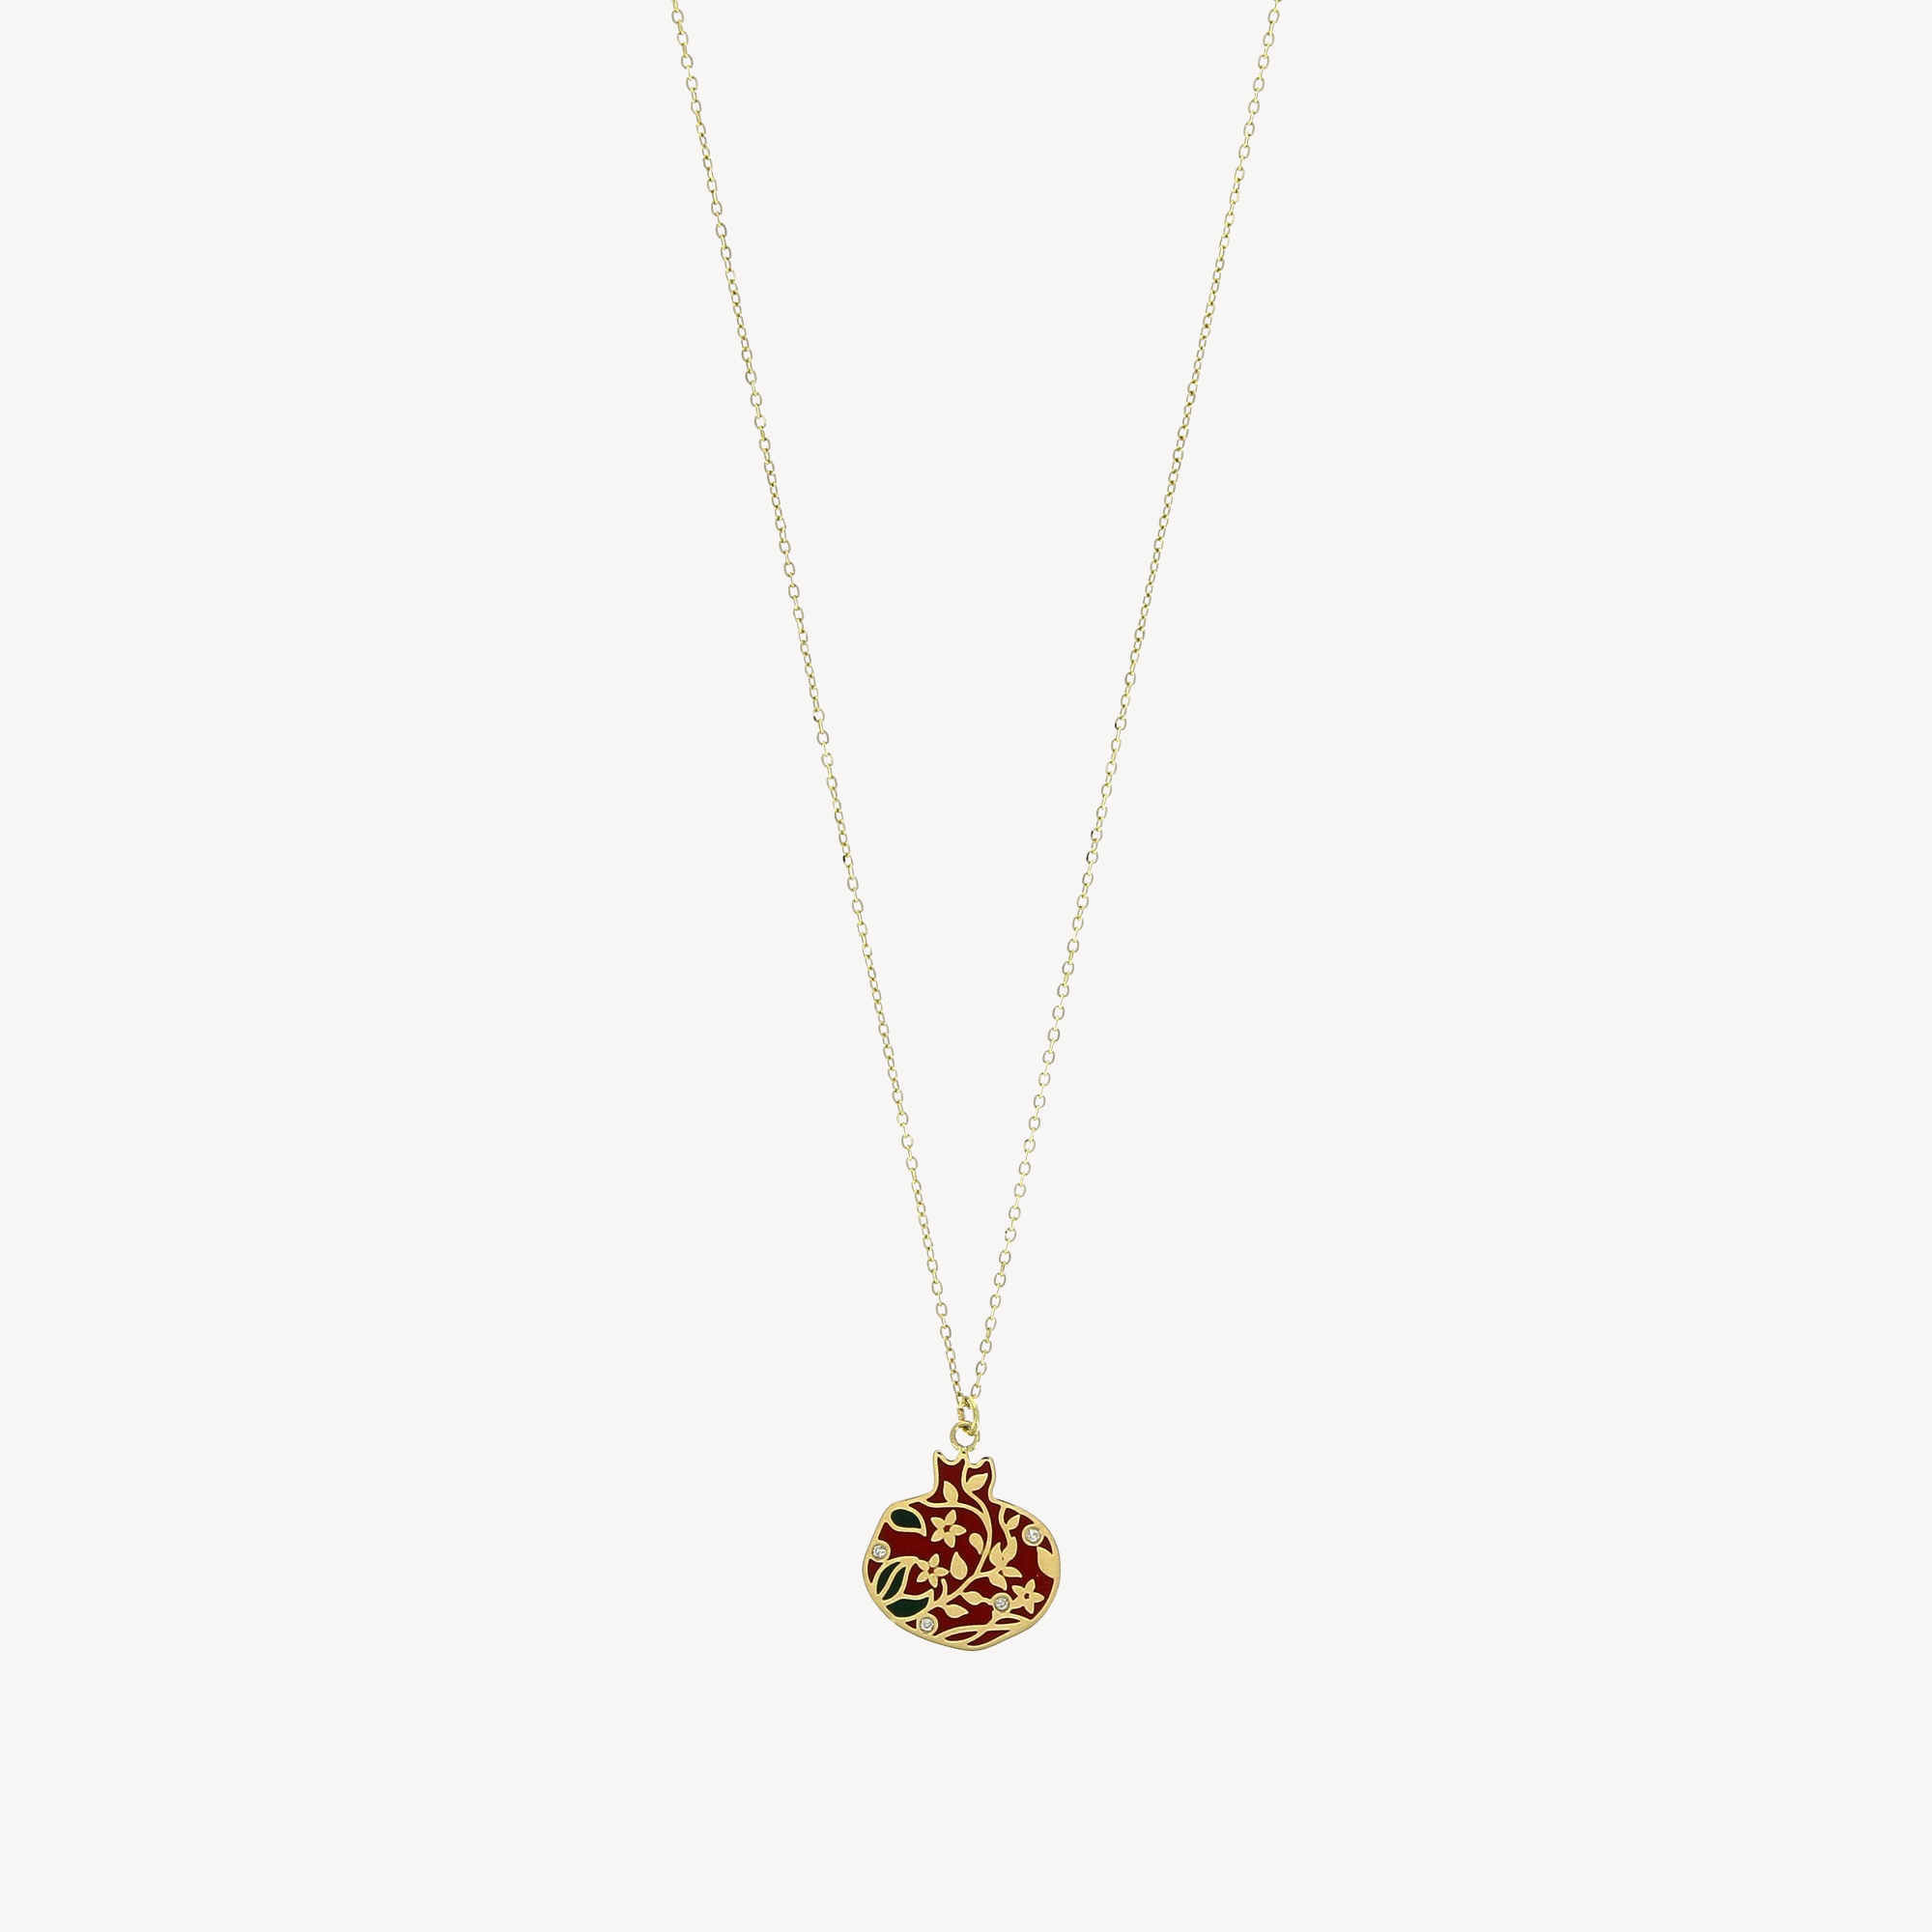 The Prosperous Pomegranate Necklace